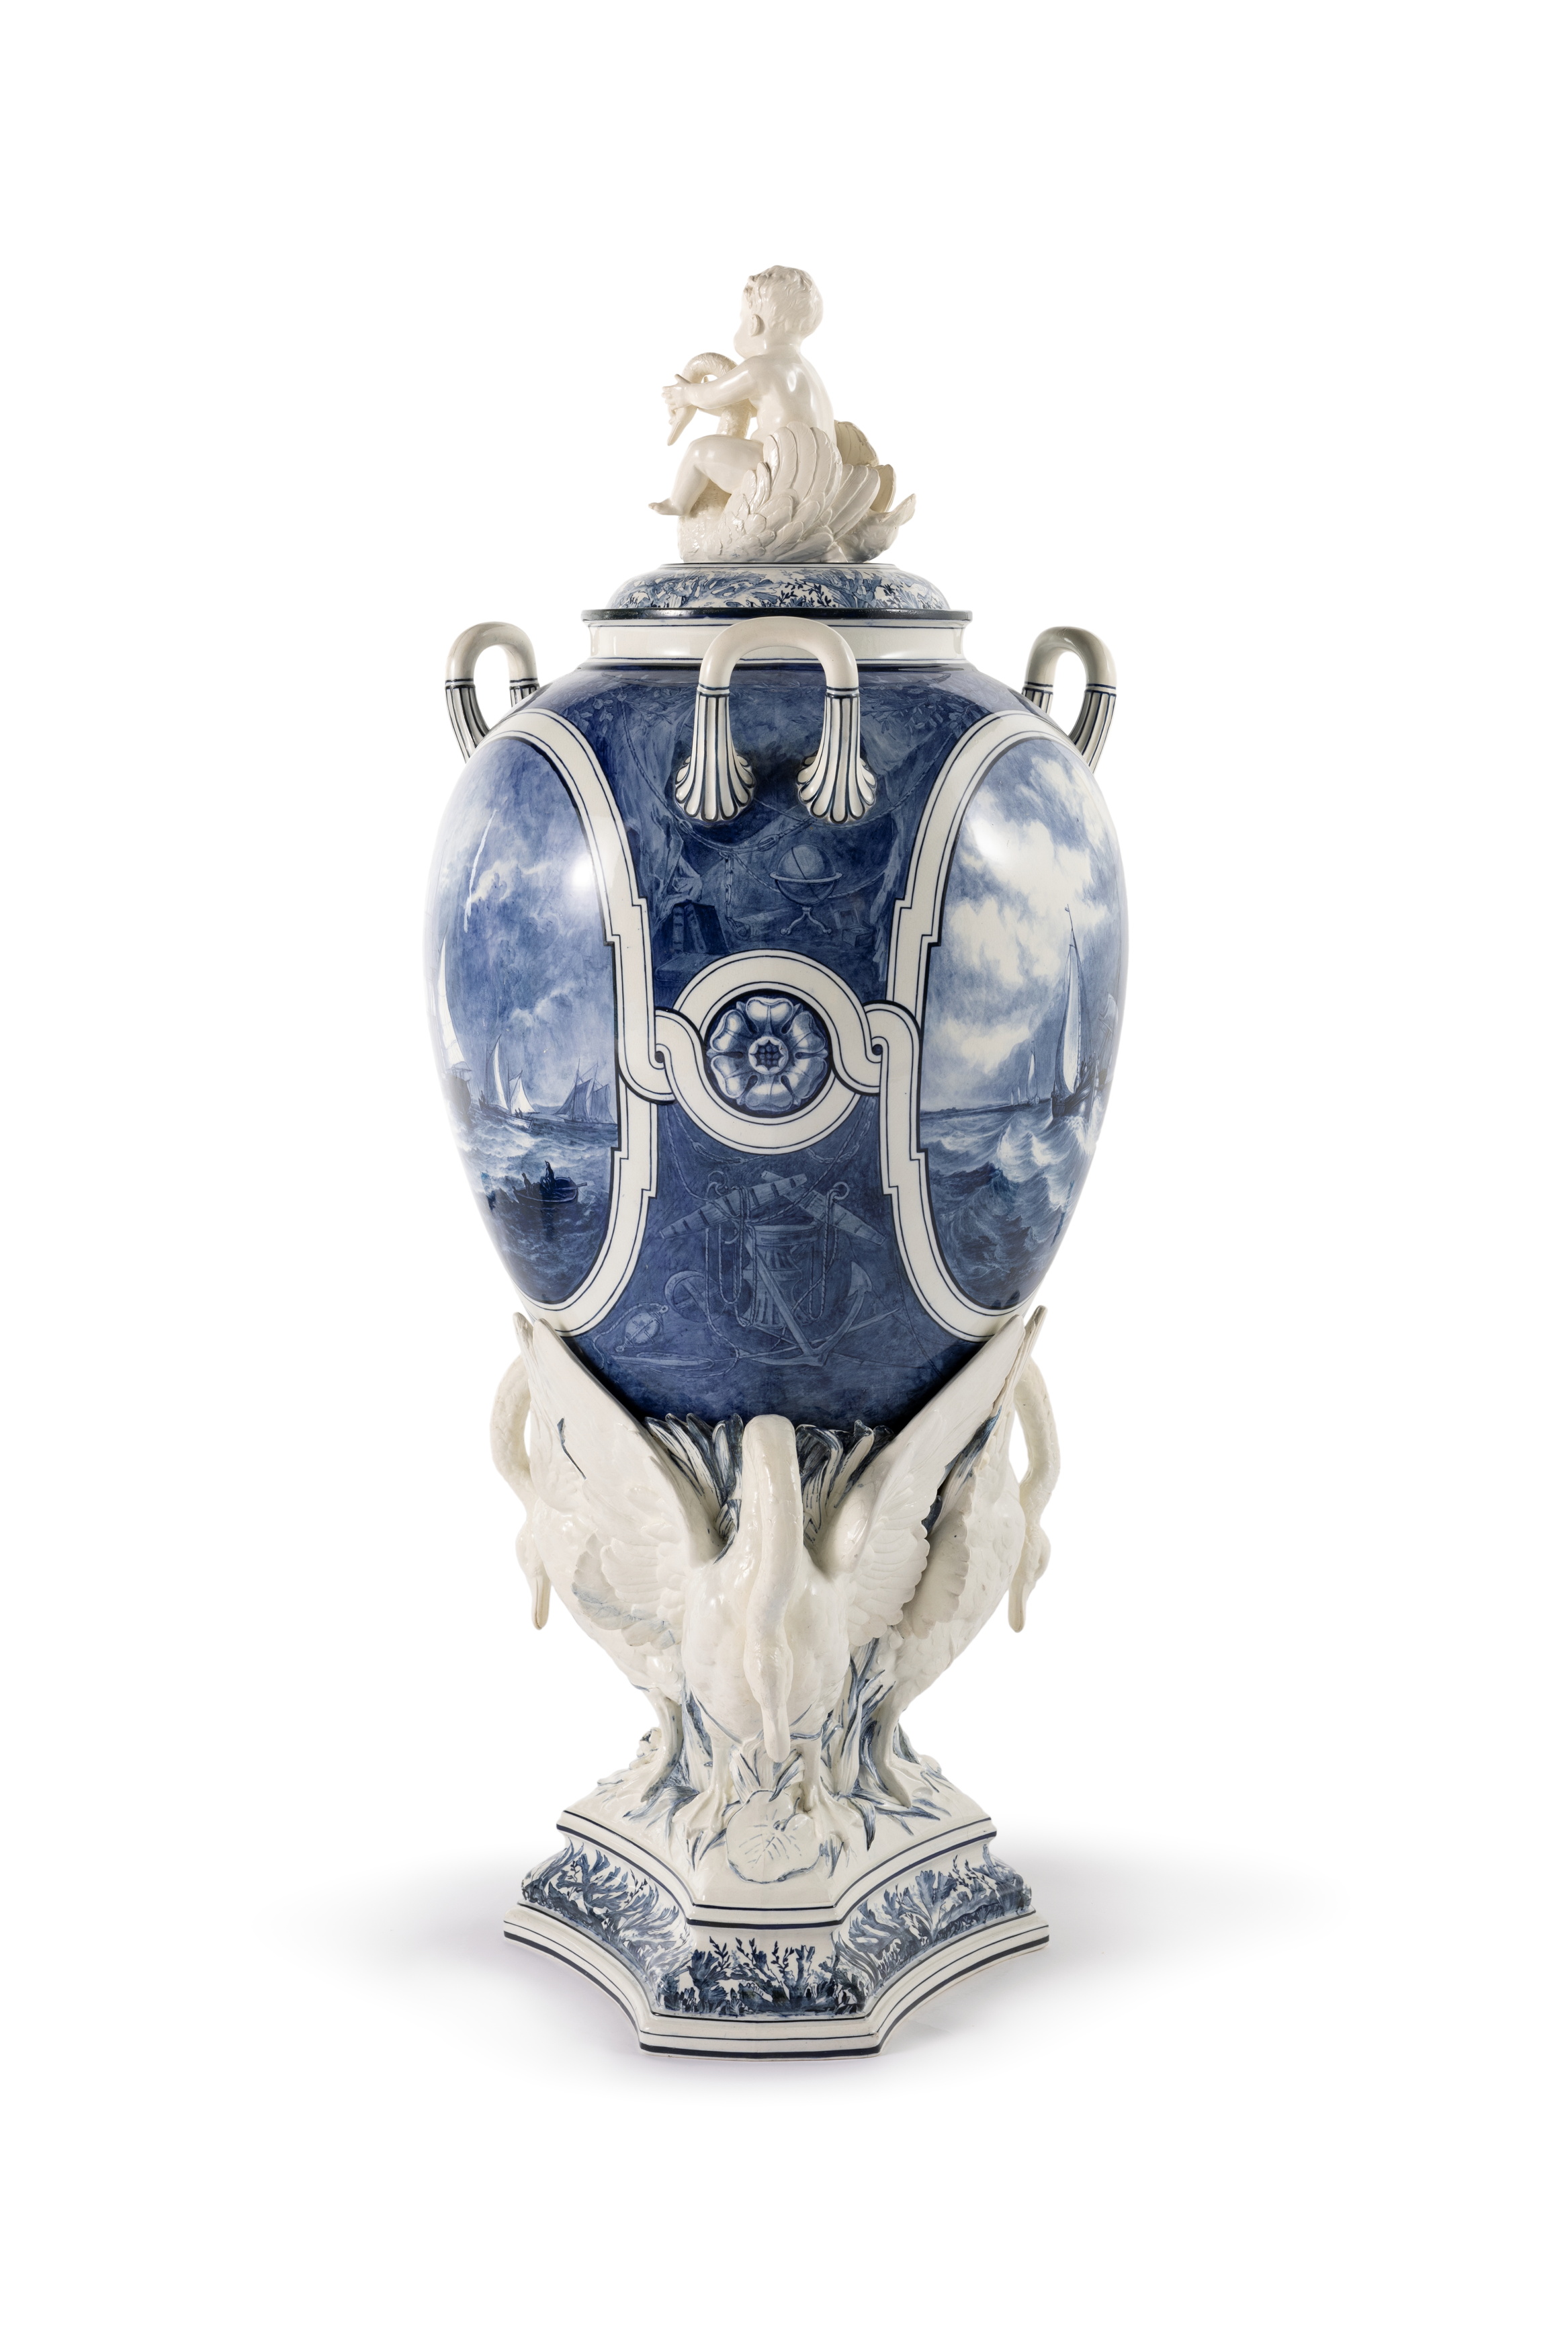 'The Swan Vase' by Wedgwood